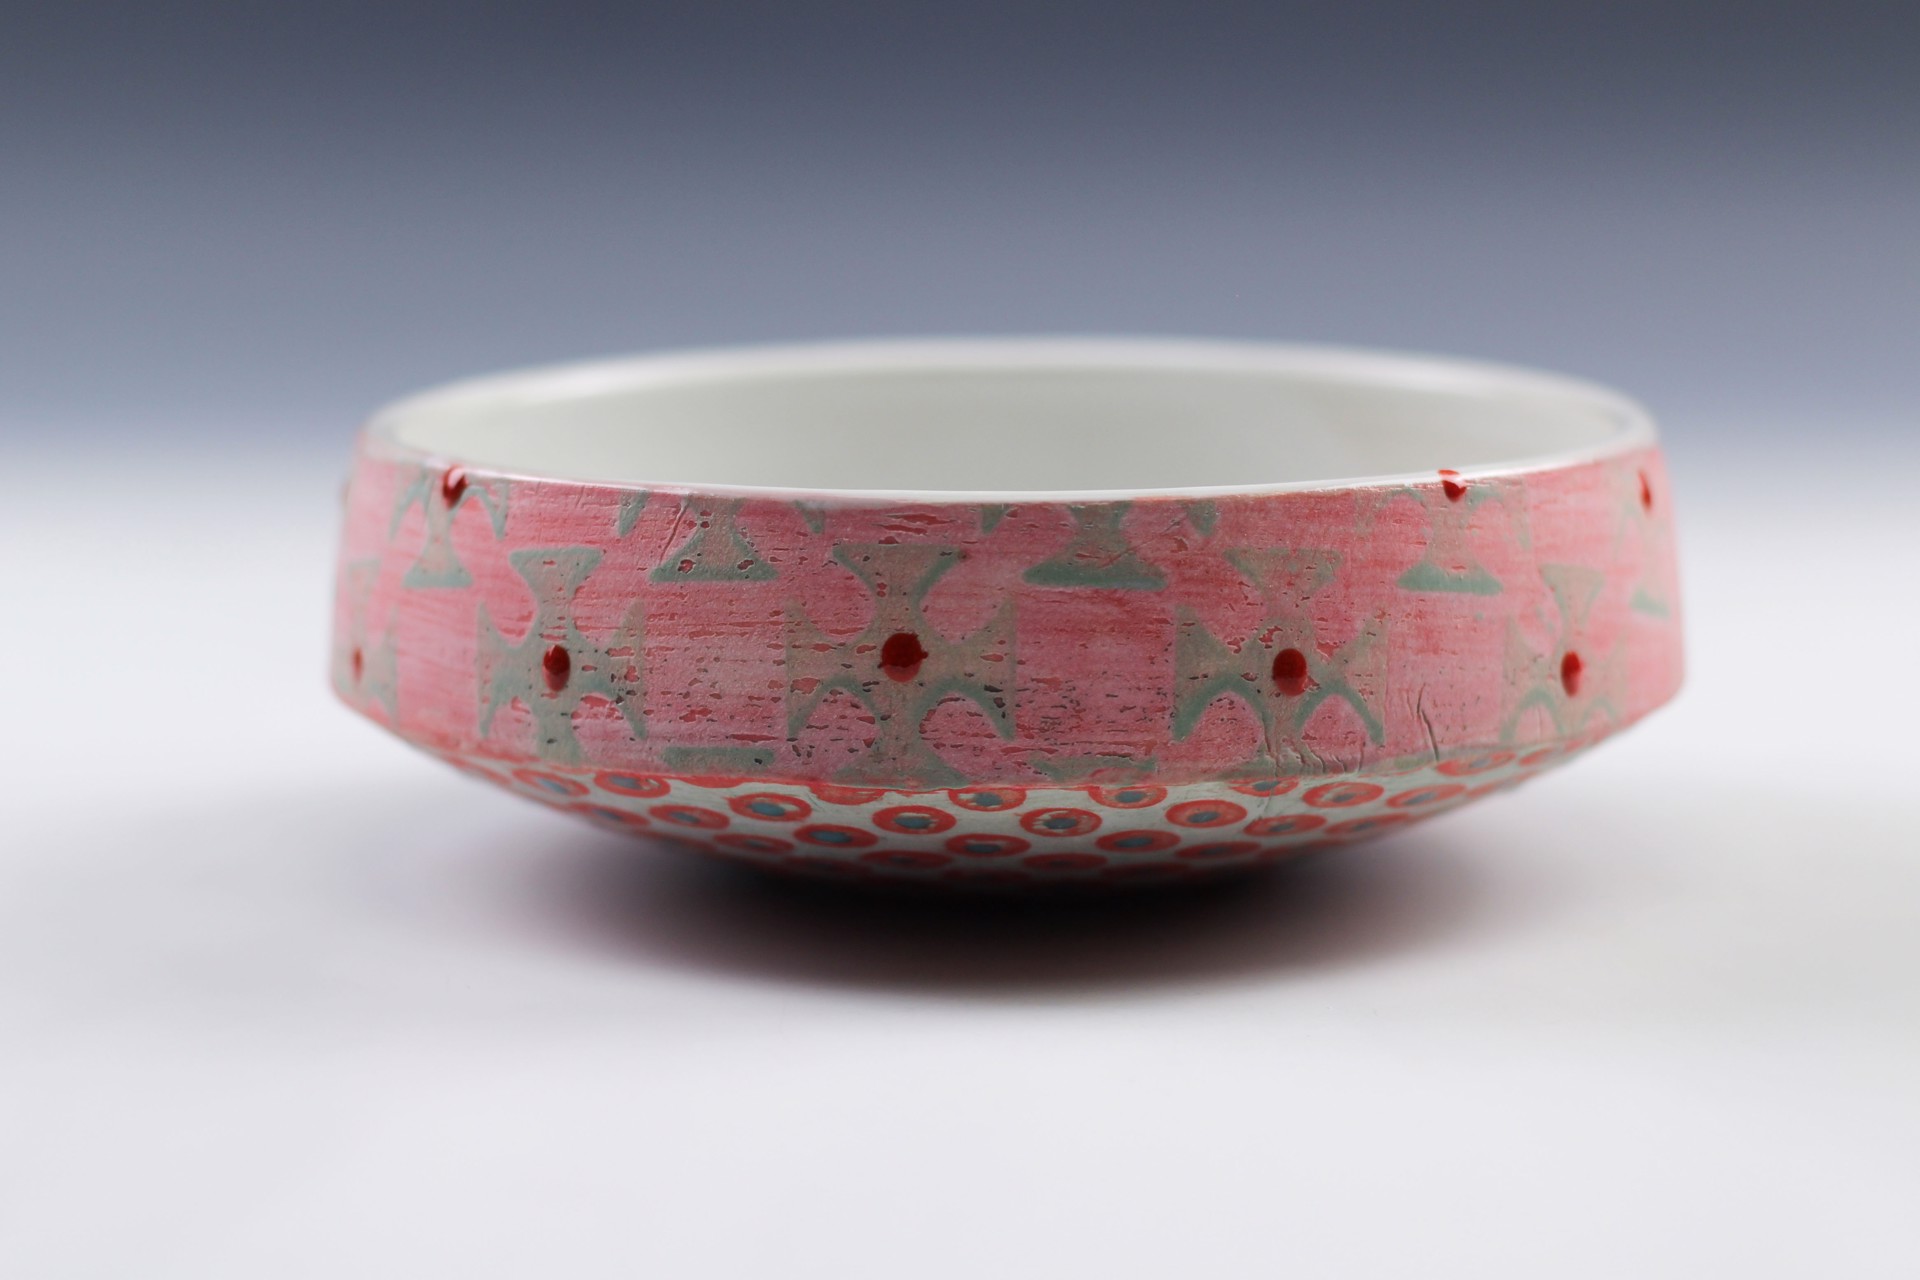 Medium Bowl by Rachelle Miller